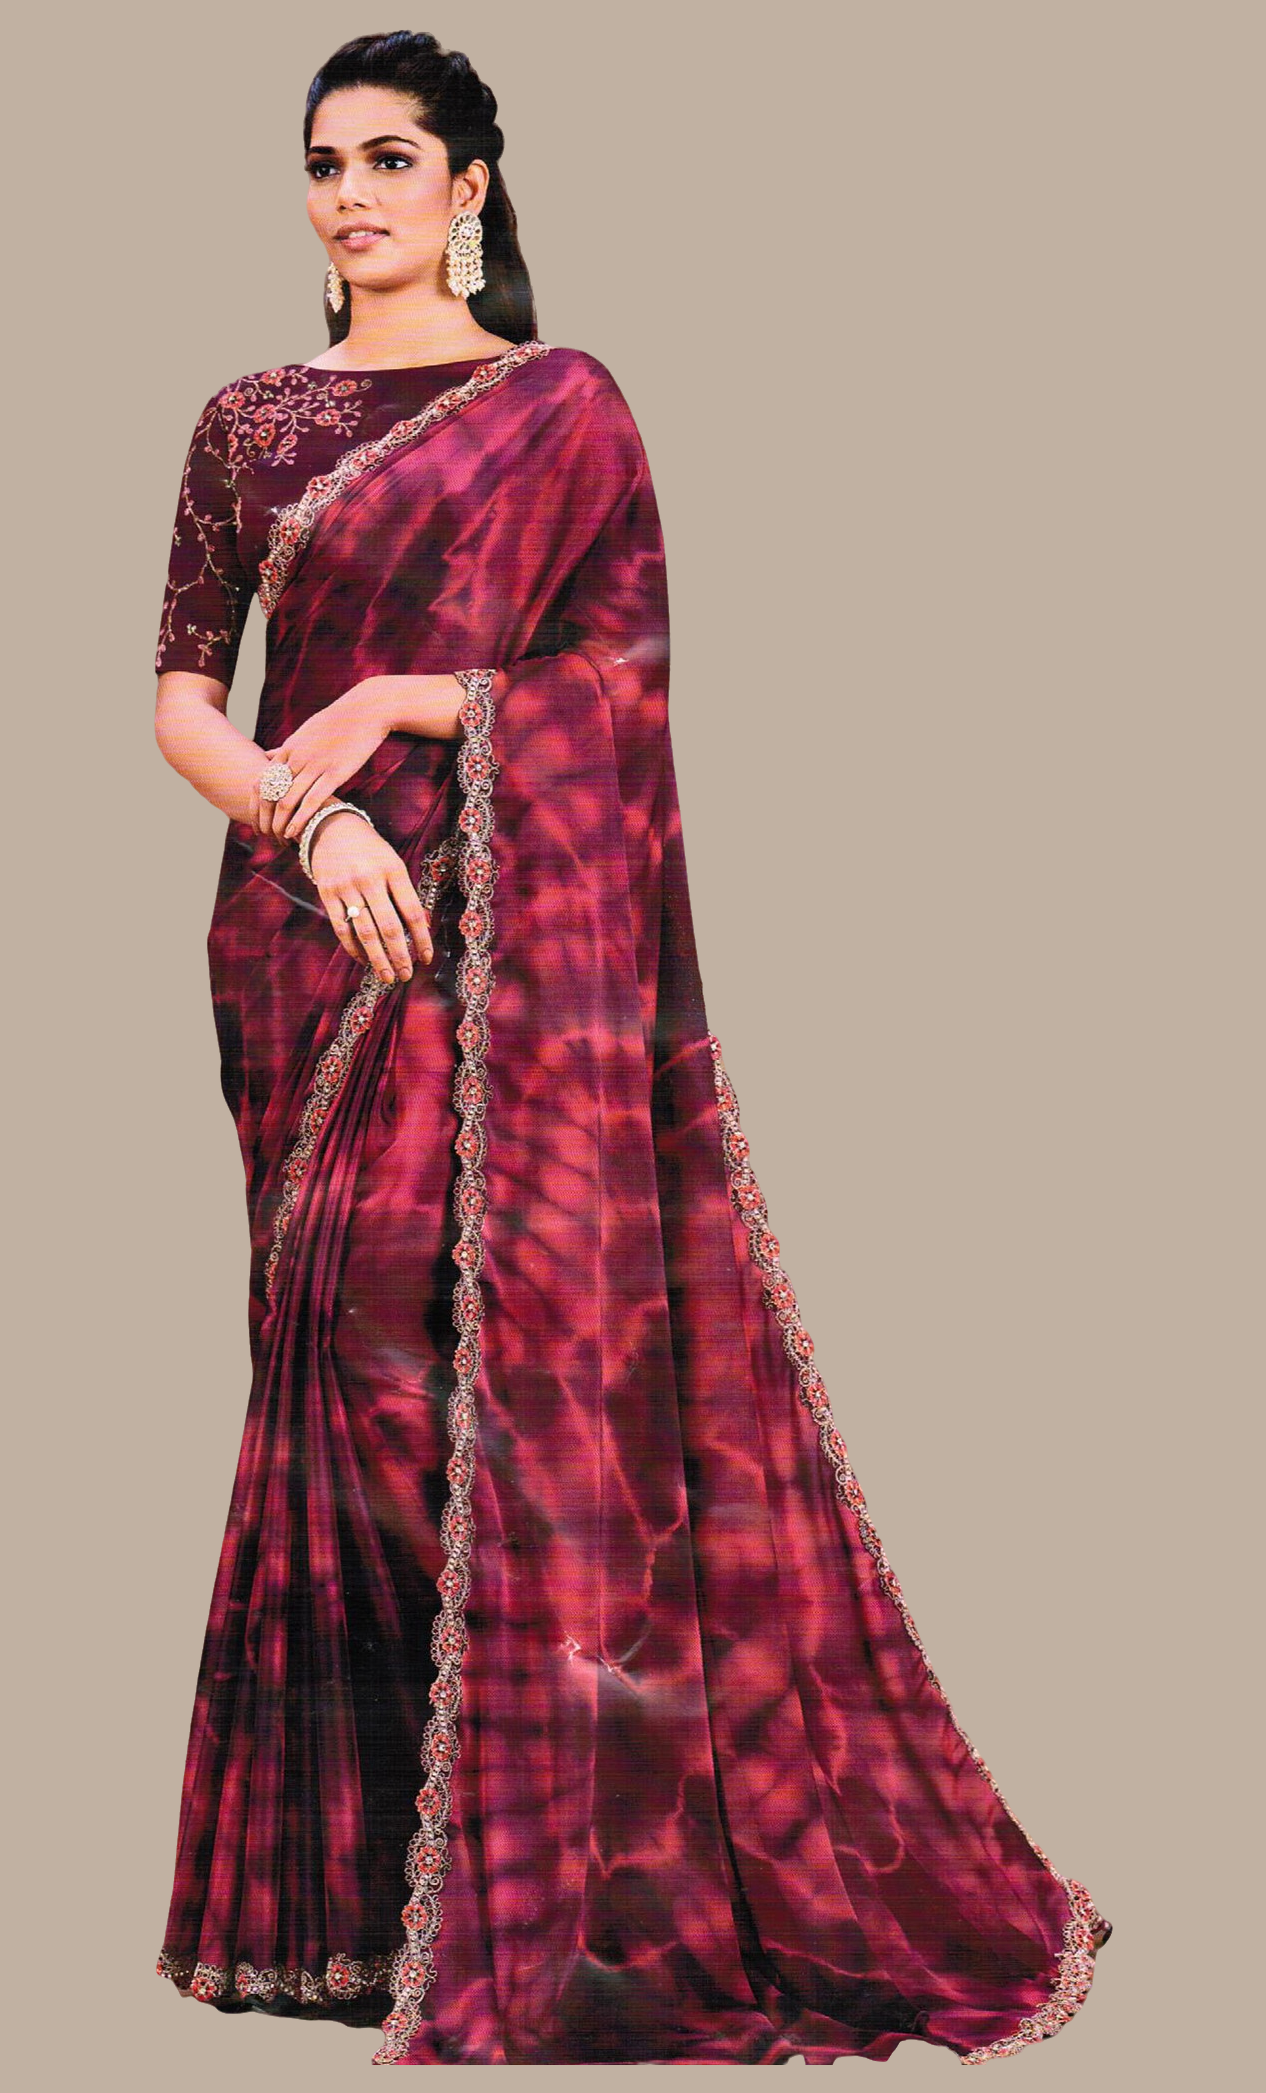 Plum Shaded Sari